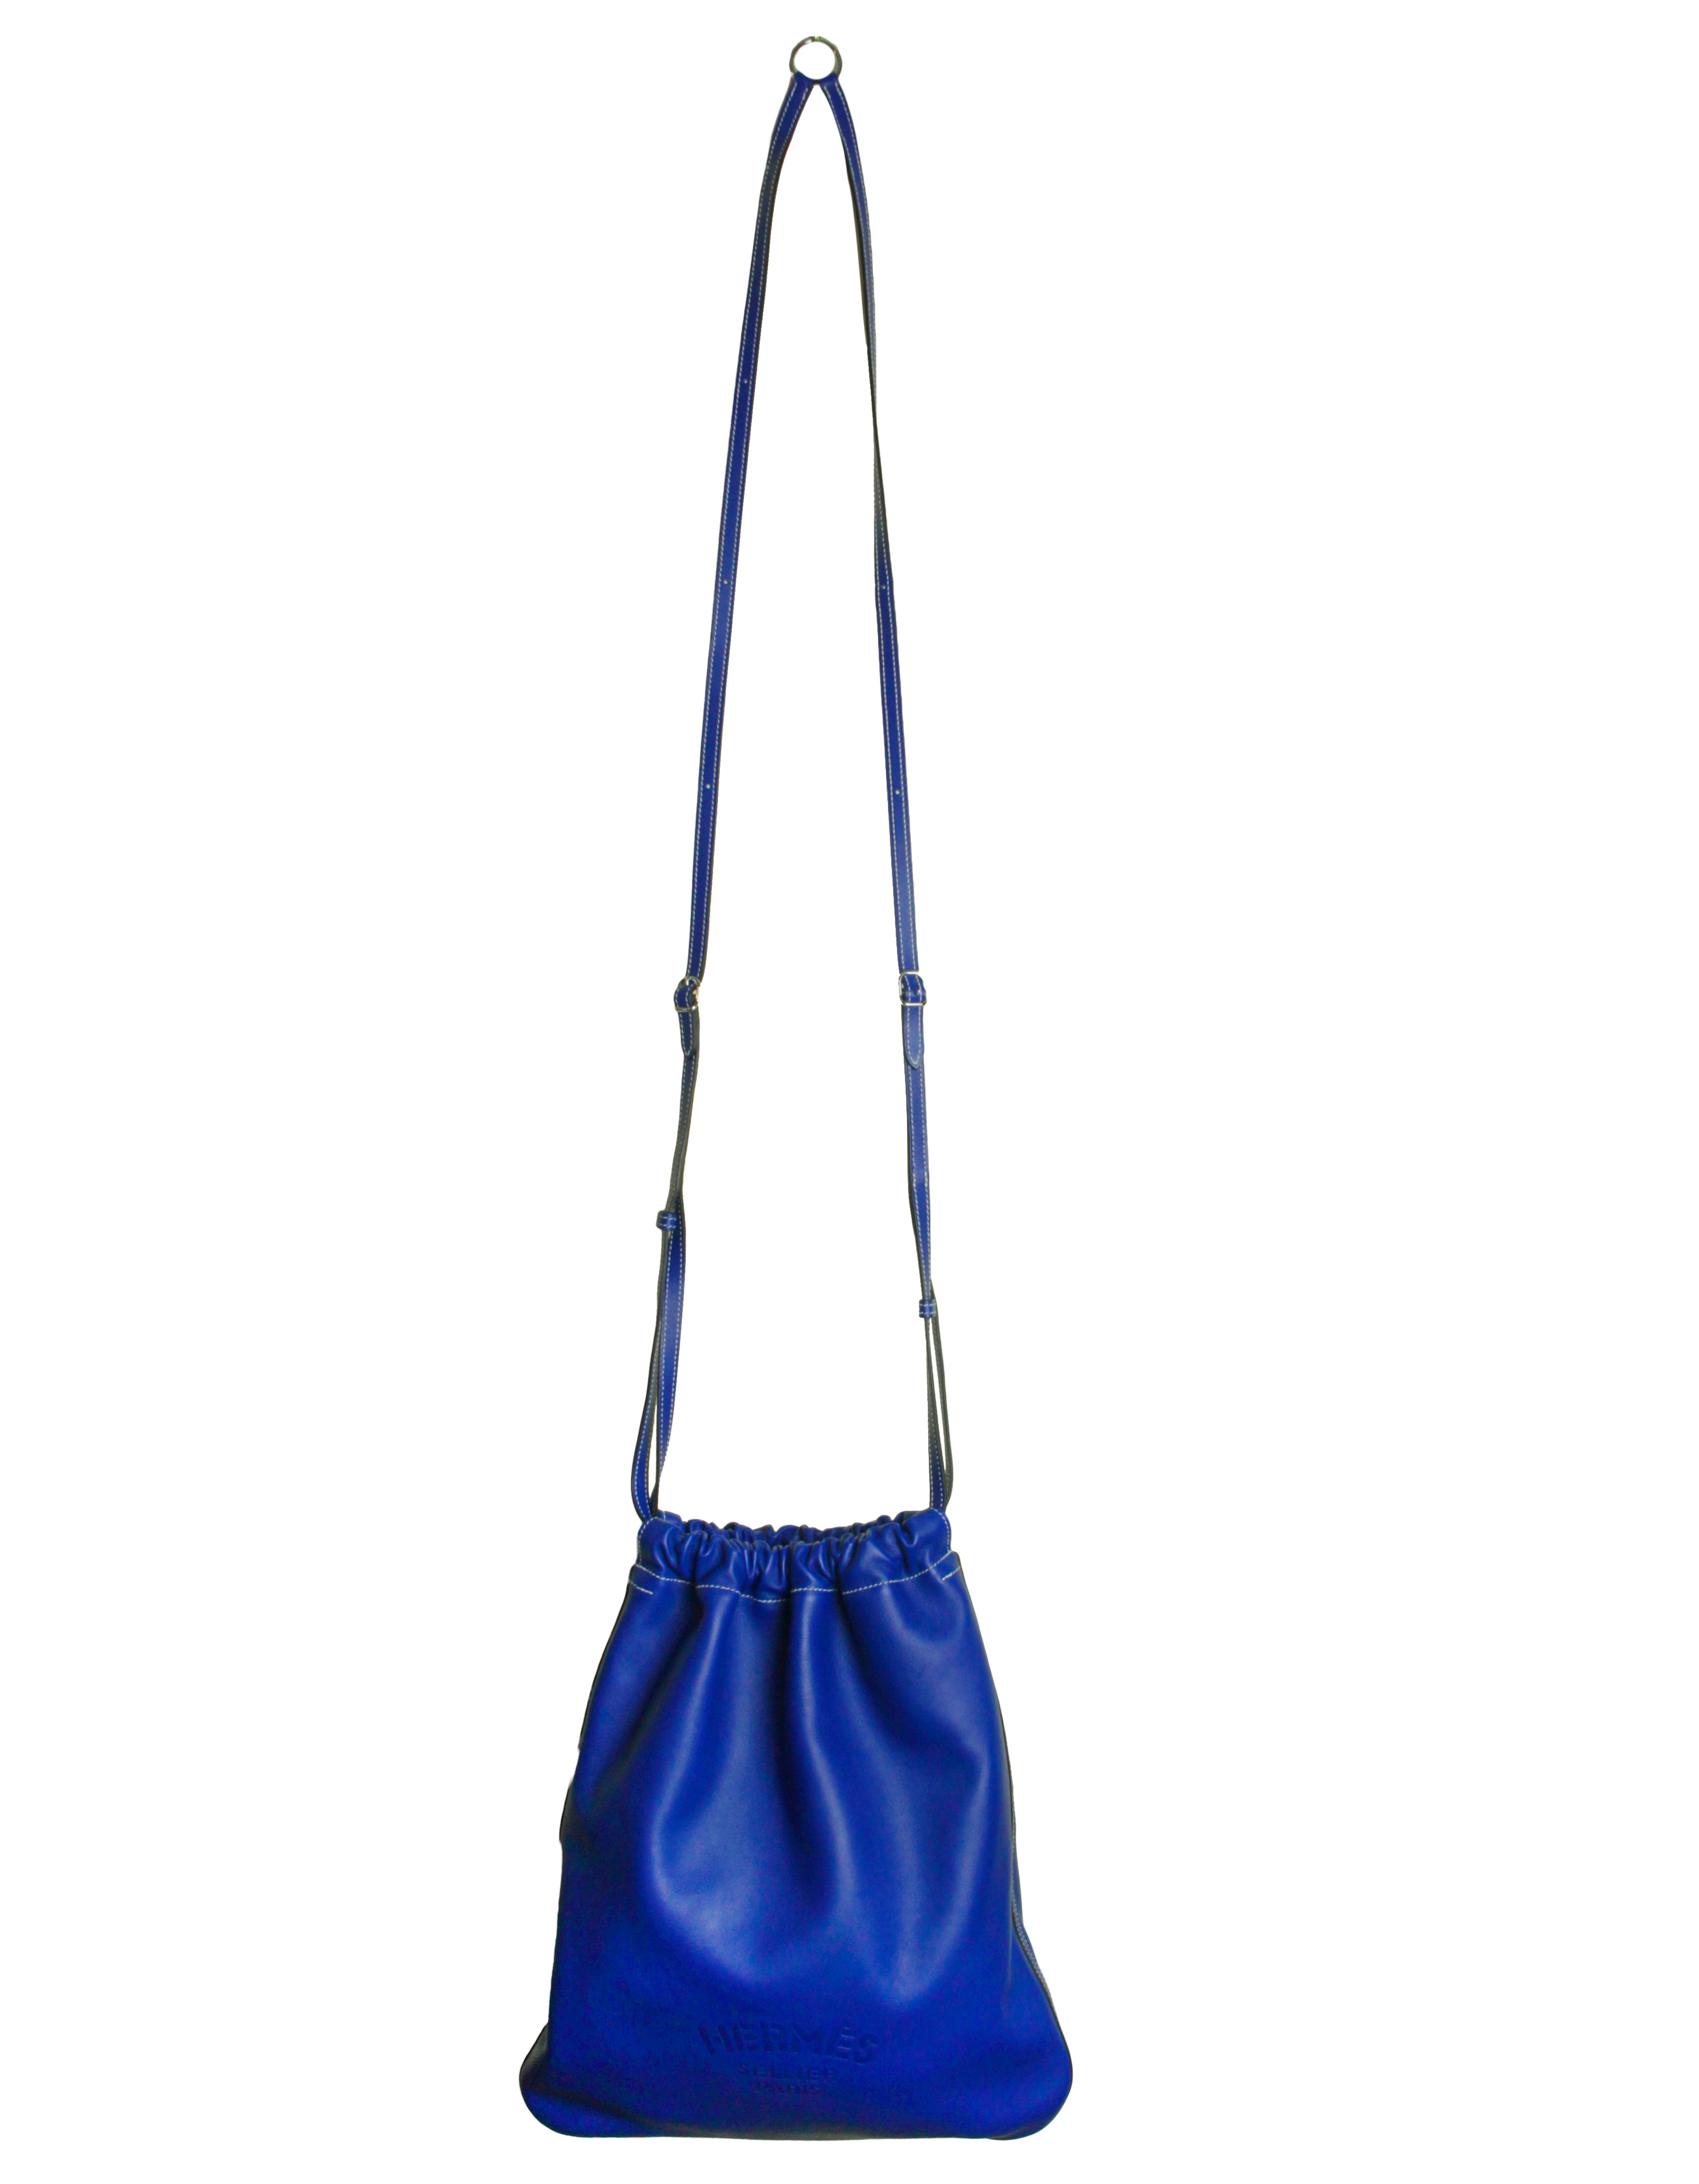 Hermes Blue Electric Bridado Convertible Crossbody/ Backpack Bag